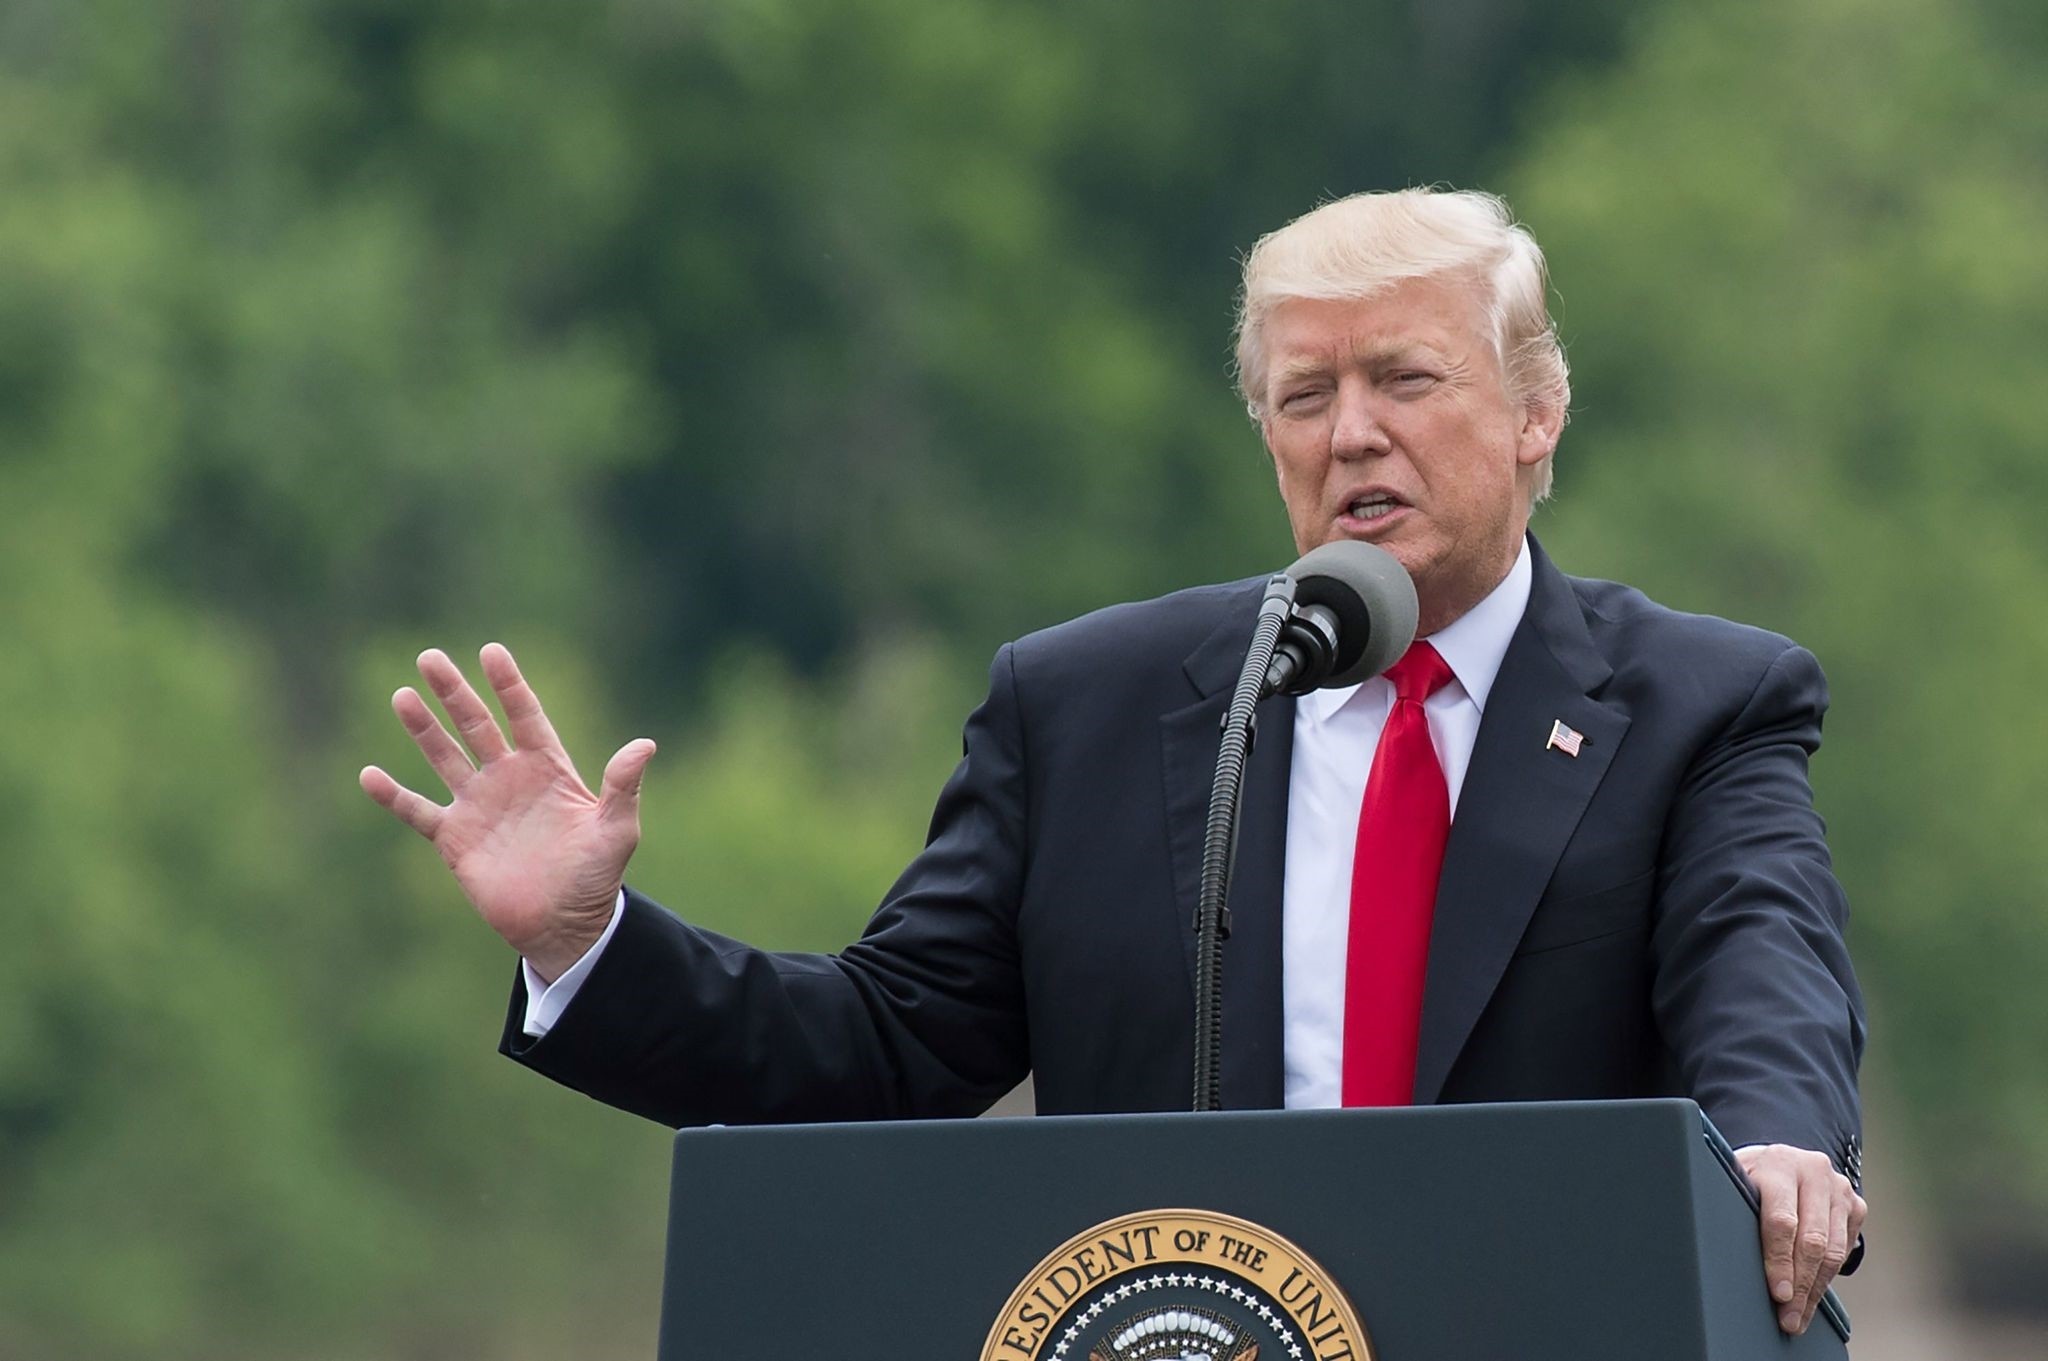 US President Donald Trump speaks in Cincinnati, Ohio, on June 7, 2017. Trump spoke about infrastructure and healthcare. (AFP Photo)